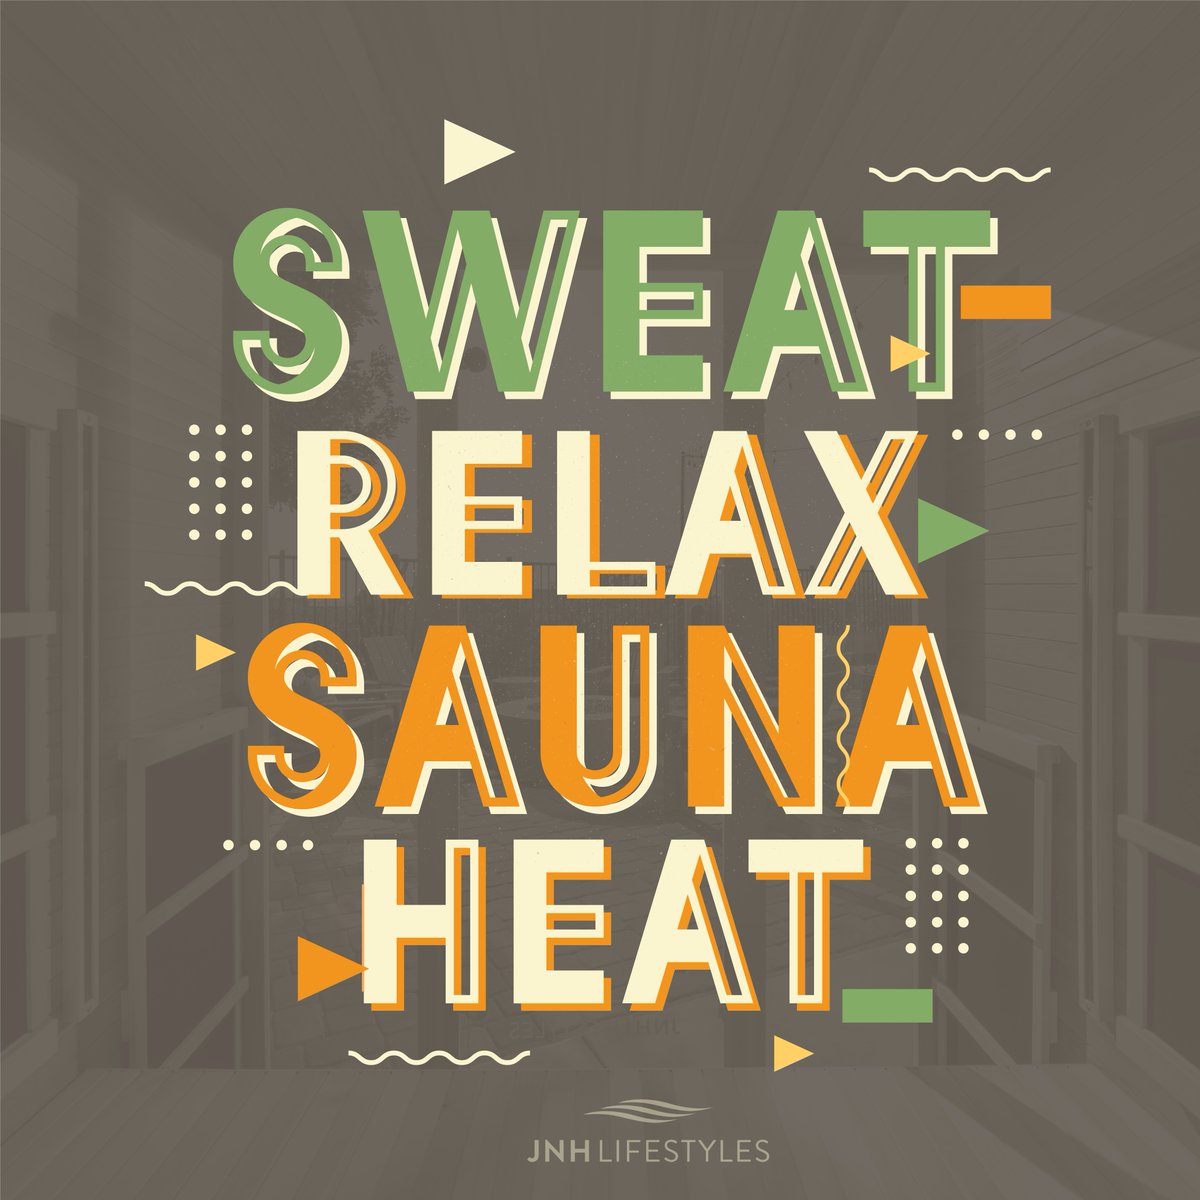 #infraredsauna #IRSauna #indoorsauna #sweatsation #relaxation #heat #saunalife

jnhlifestyles.com